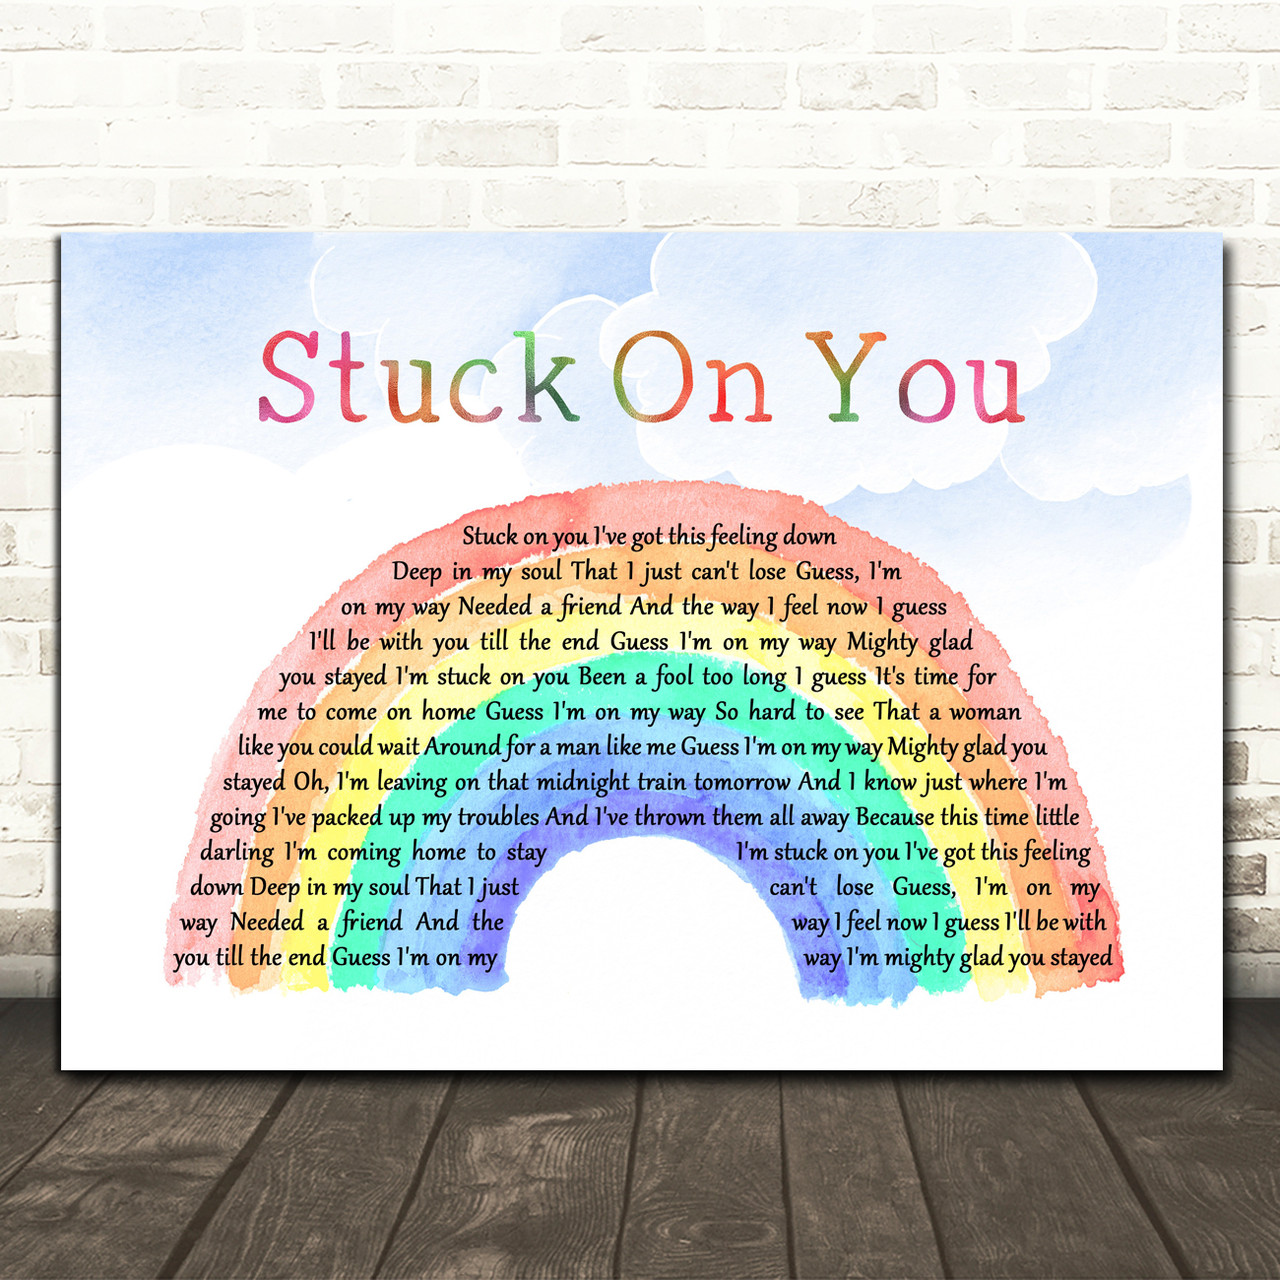 STUCK ON YOU LYRICS by LIONEL RICHIE: Stuck on you I've